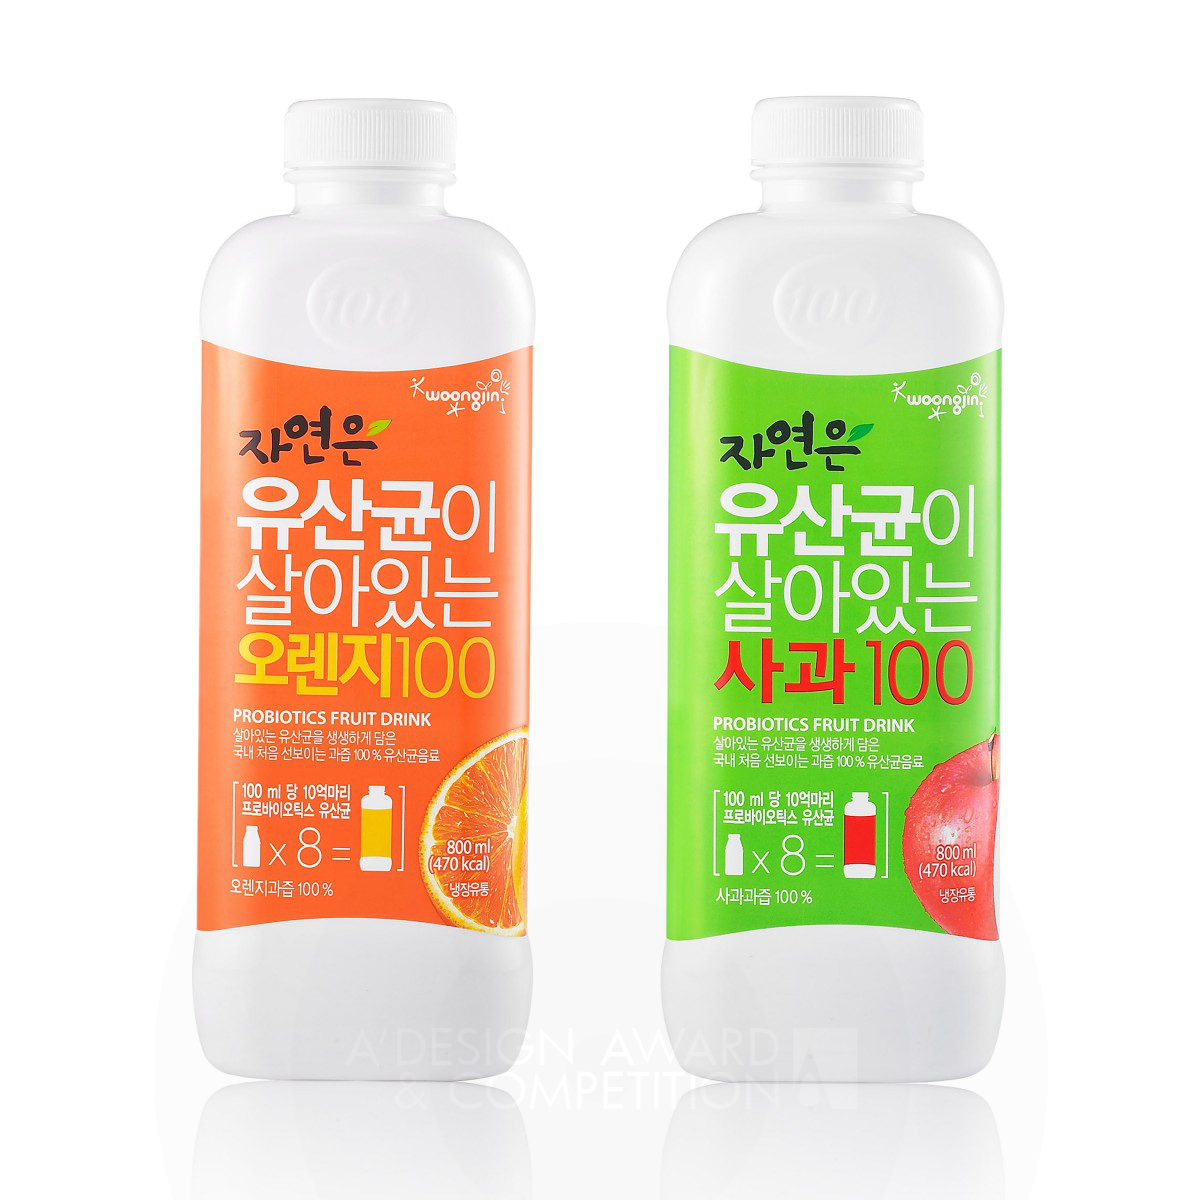 PROBIOTICS FRUIT DRINK Beverage by Woongjin Food Design Team